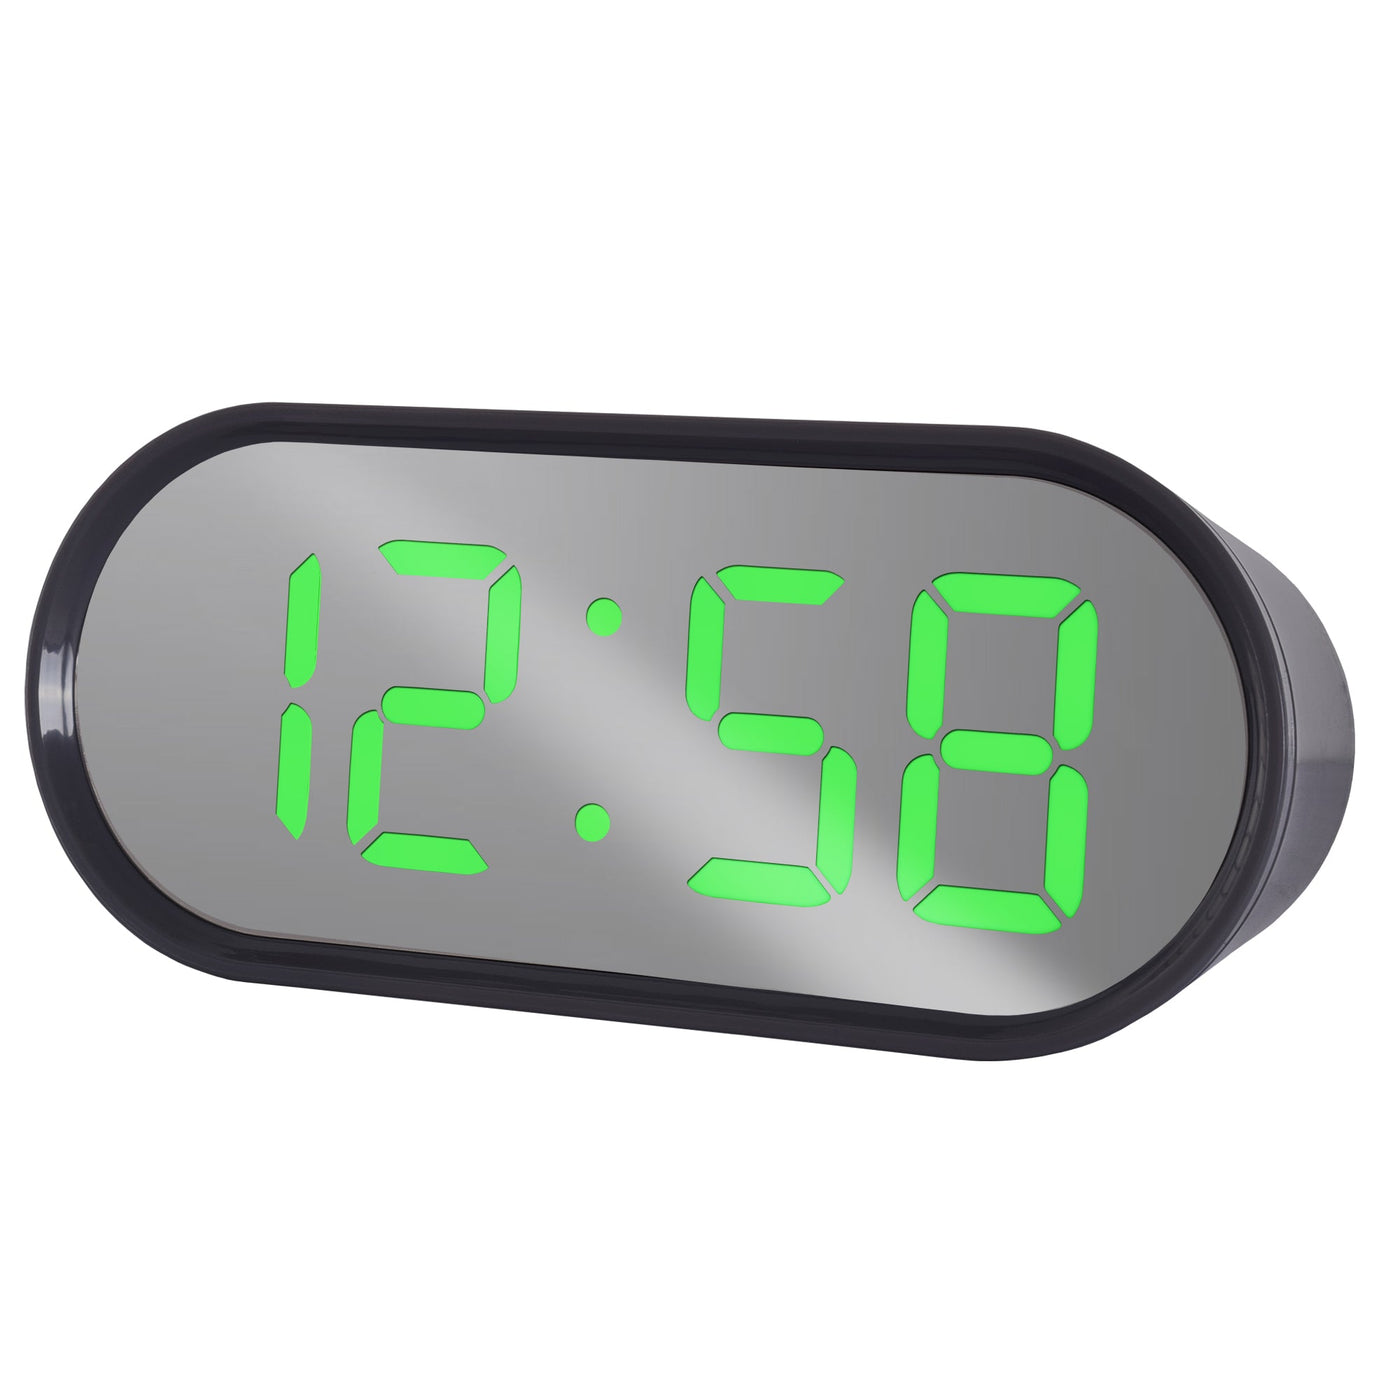 Acctim Kissen Digital Alarm Clock London Sky - timeframedclocks